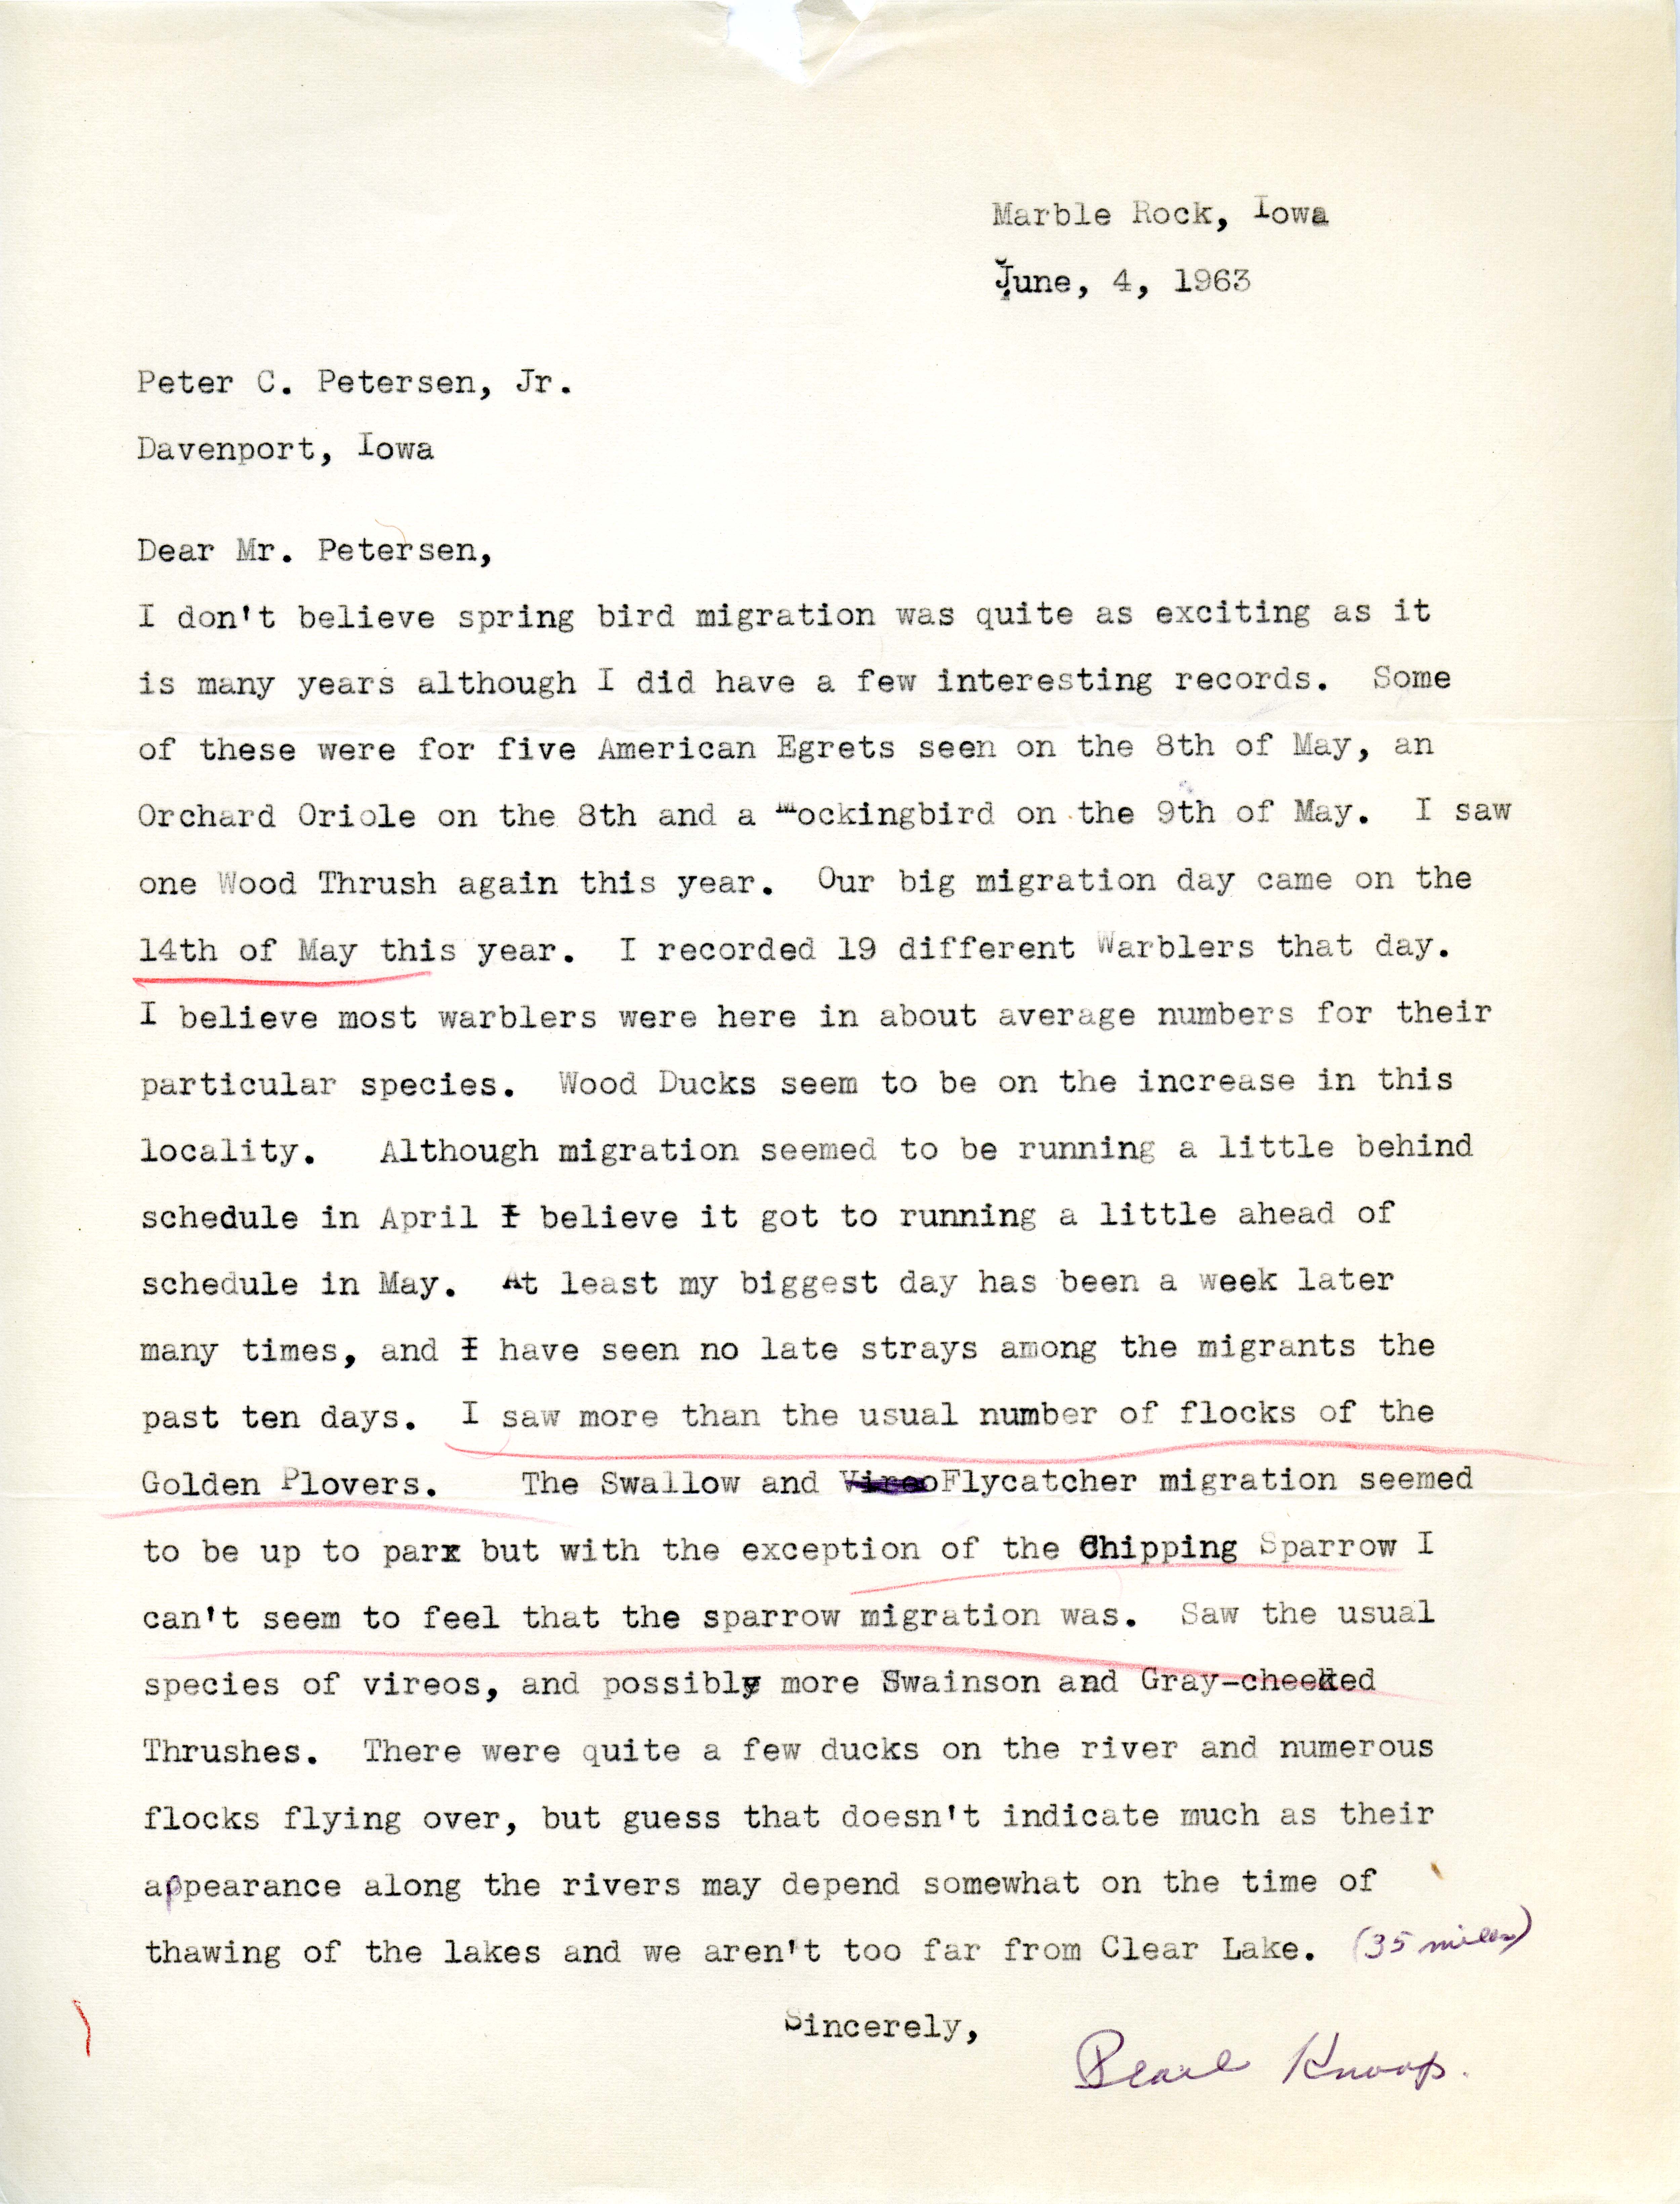 Pearl Knoop letter to Peter C. Petersen regarding spring migration, June 4, 1963 